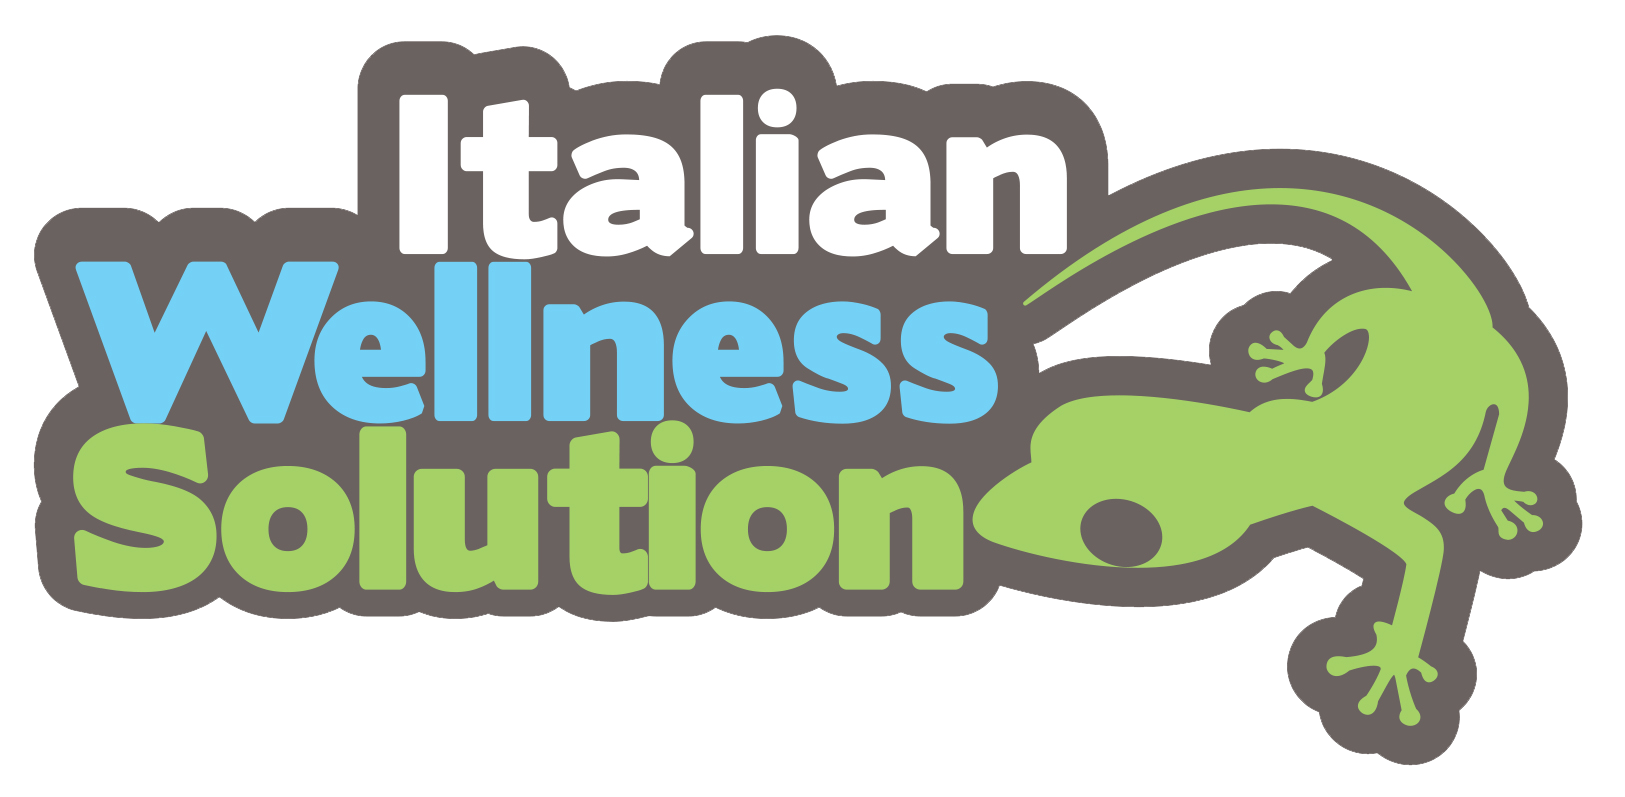 Italian wellness solution